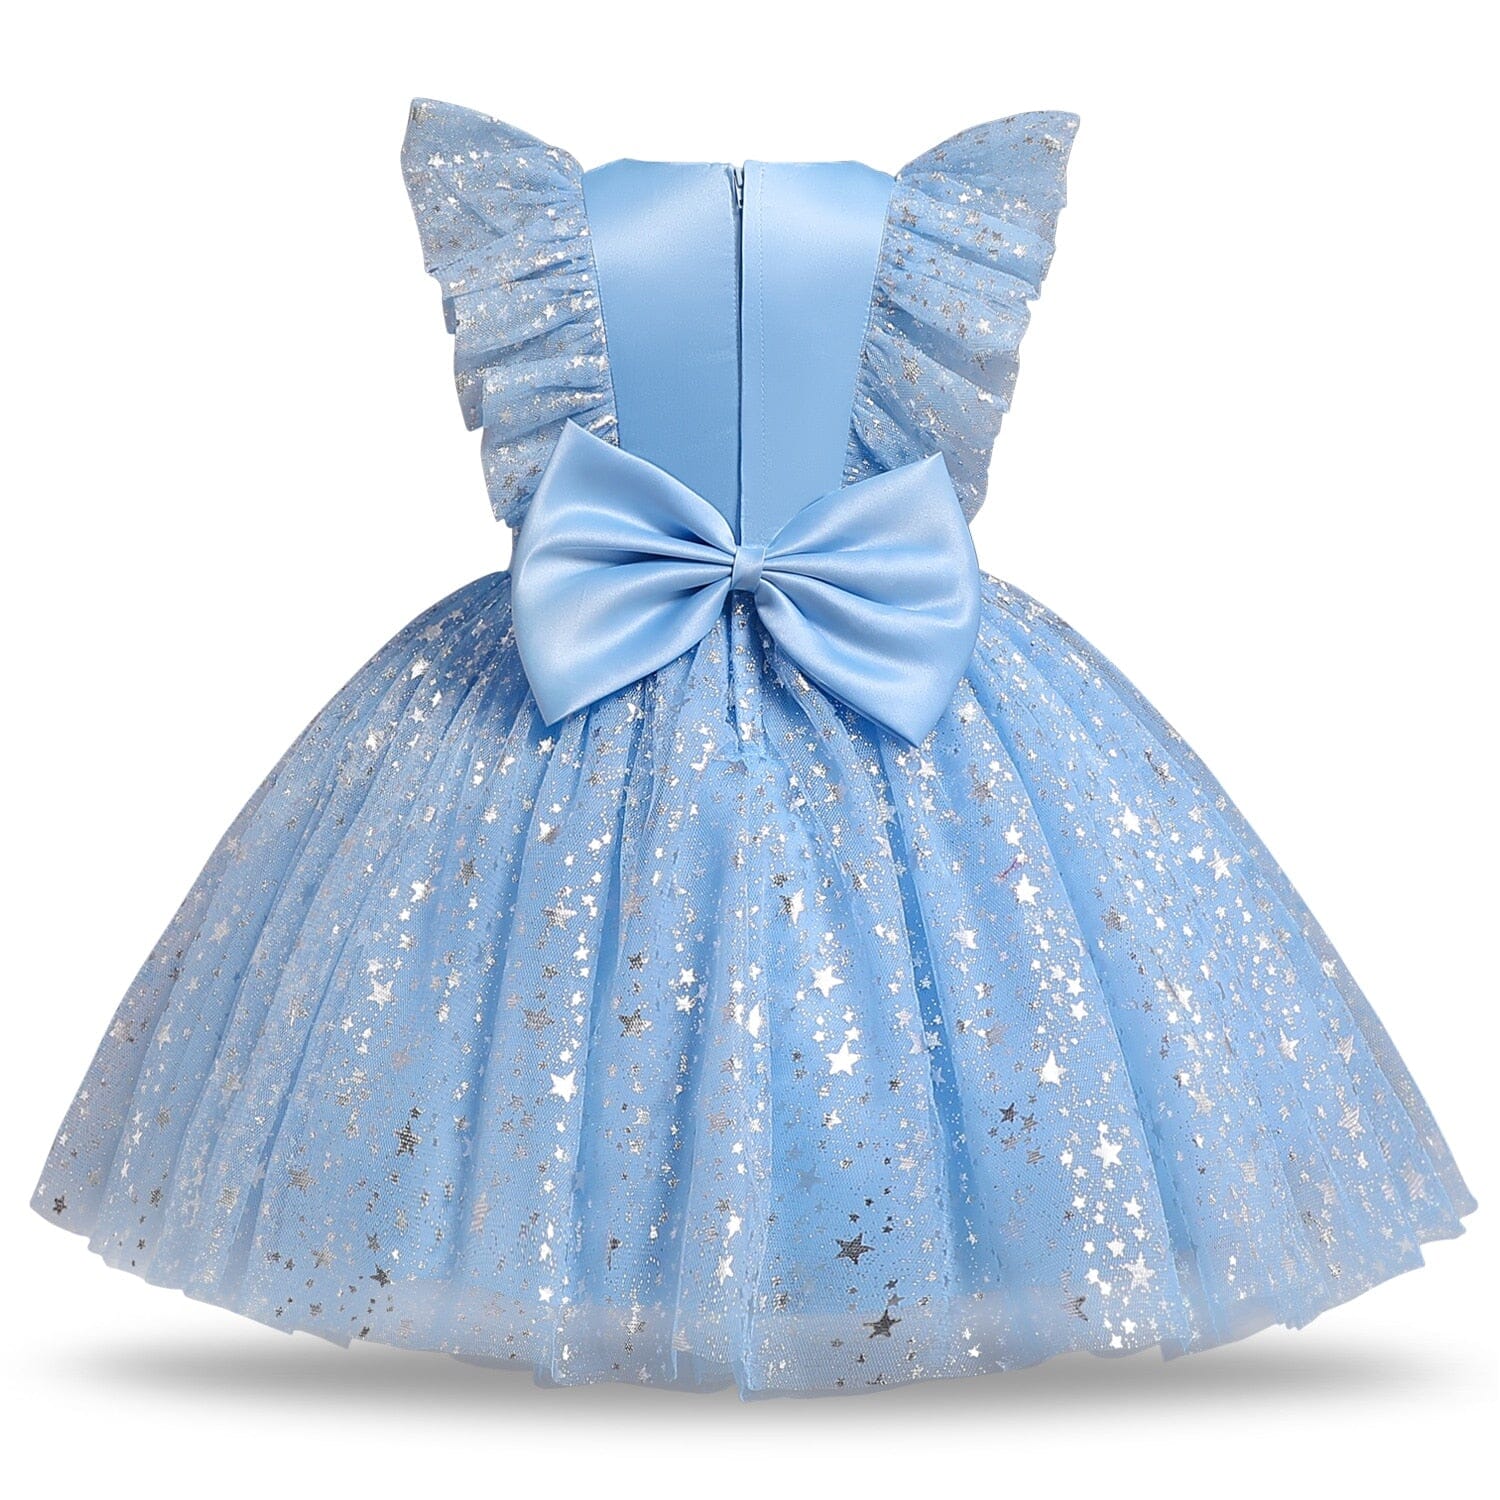 Big Bow Dress for Girls Baby & Toddler Dresses Fashionjosie LightSkyBlue 3M 